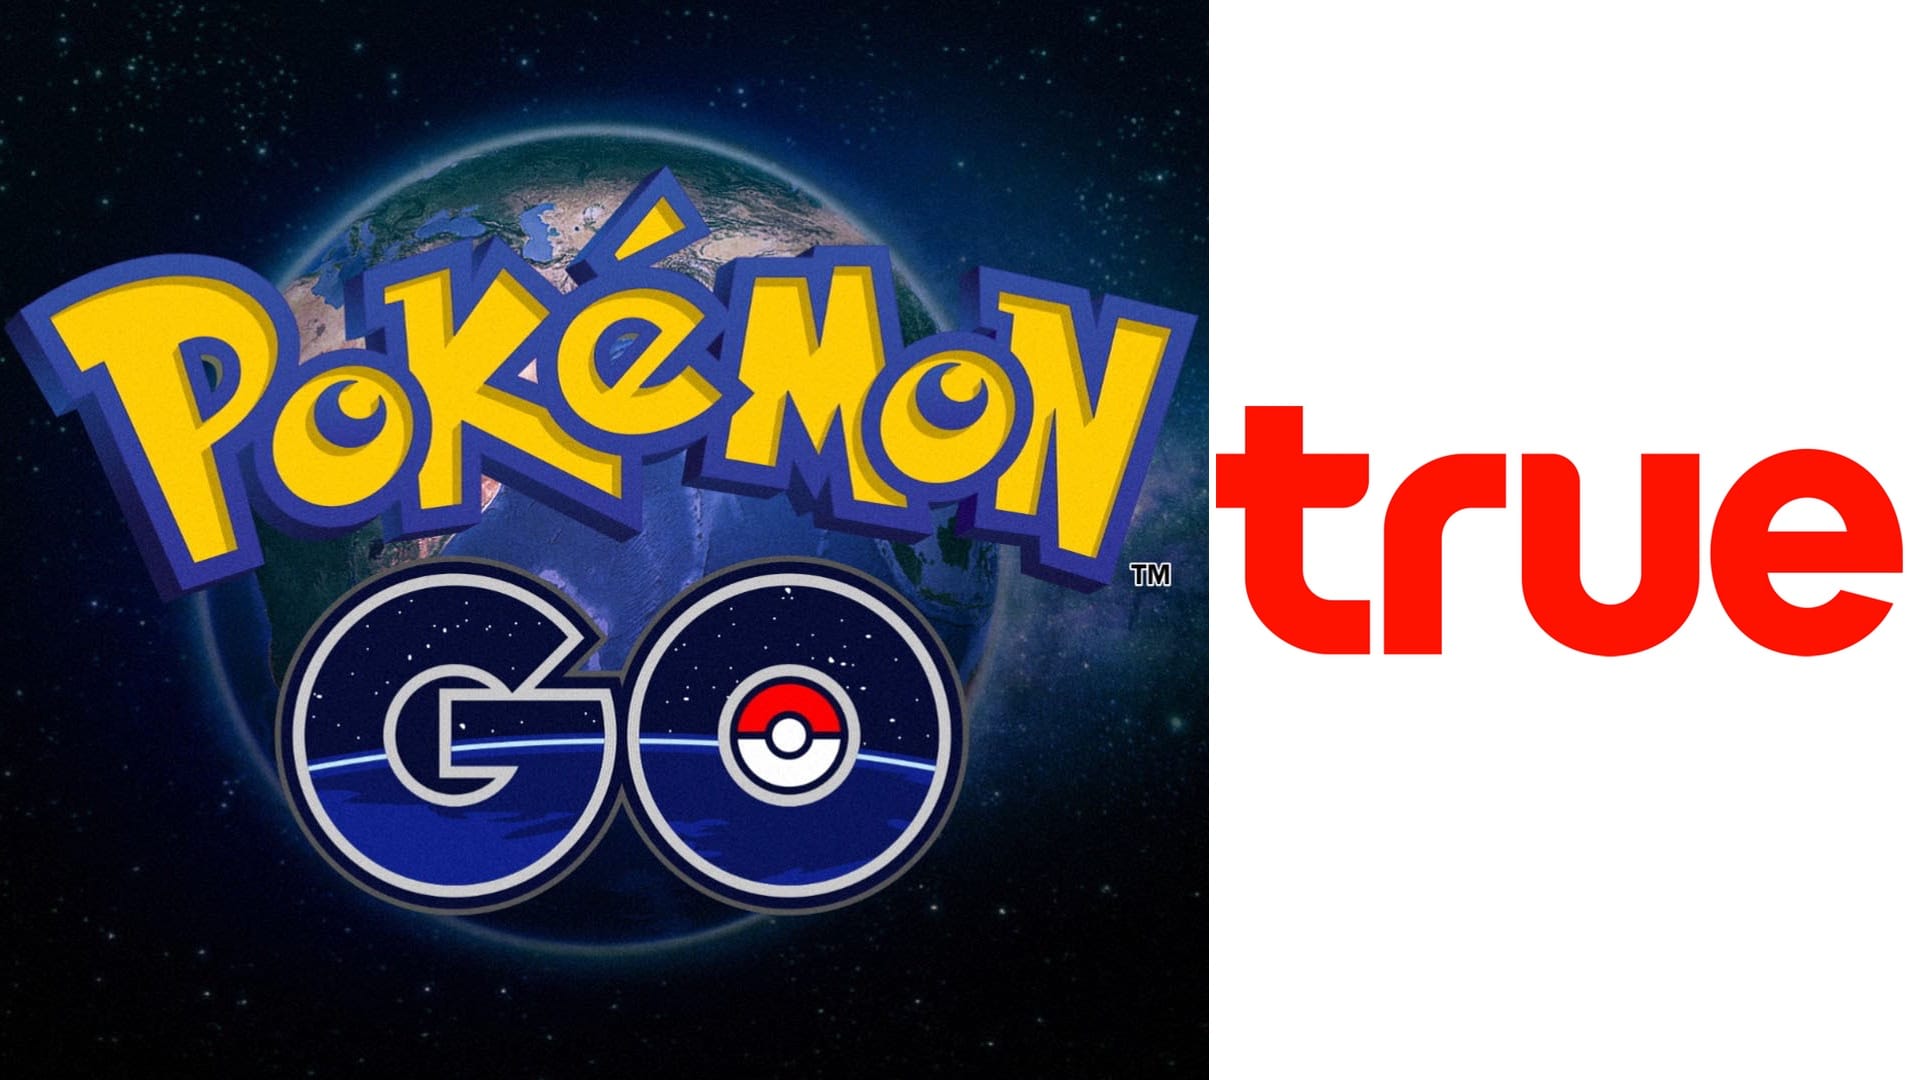 True ยืนยันจะมี Pokemon Go เวอร์ชั่นประเทศไทย ที่ทรูดูแล